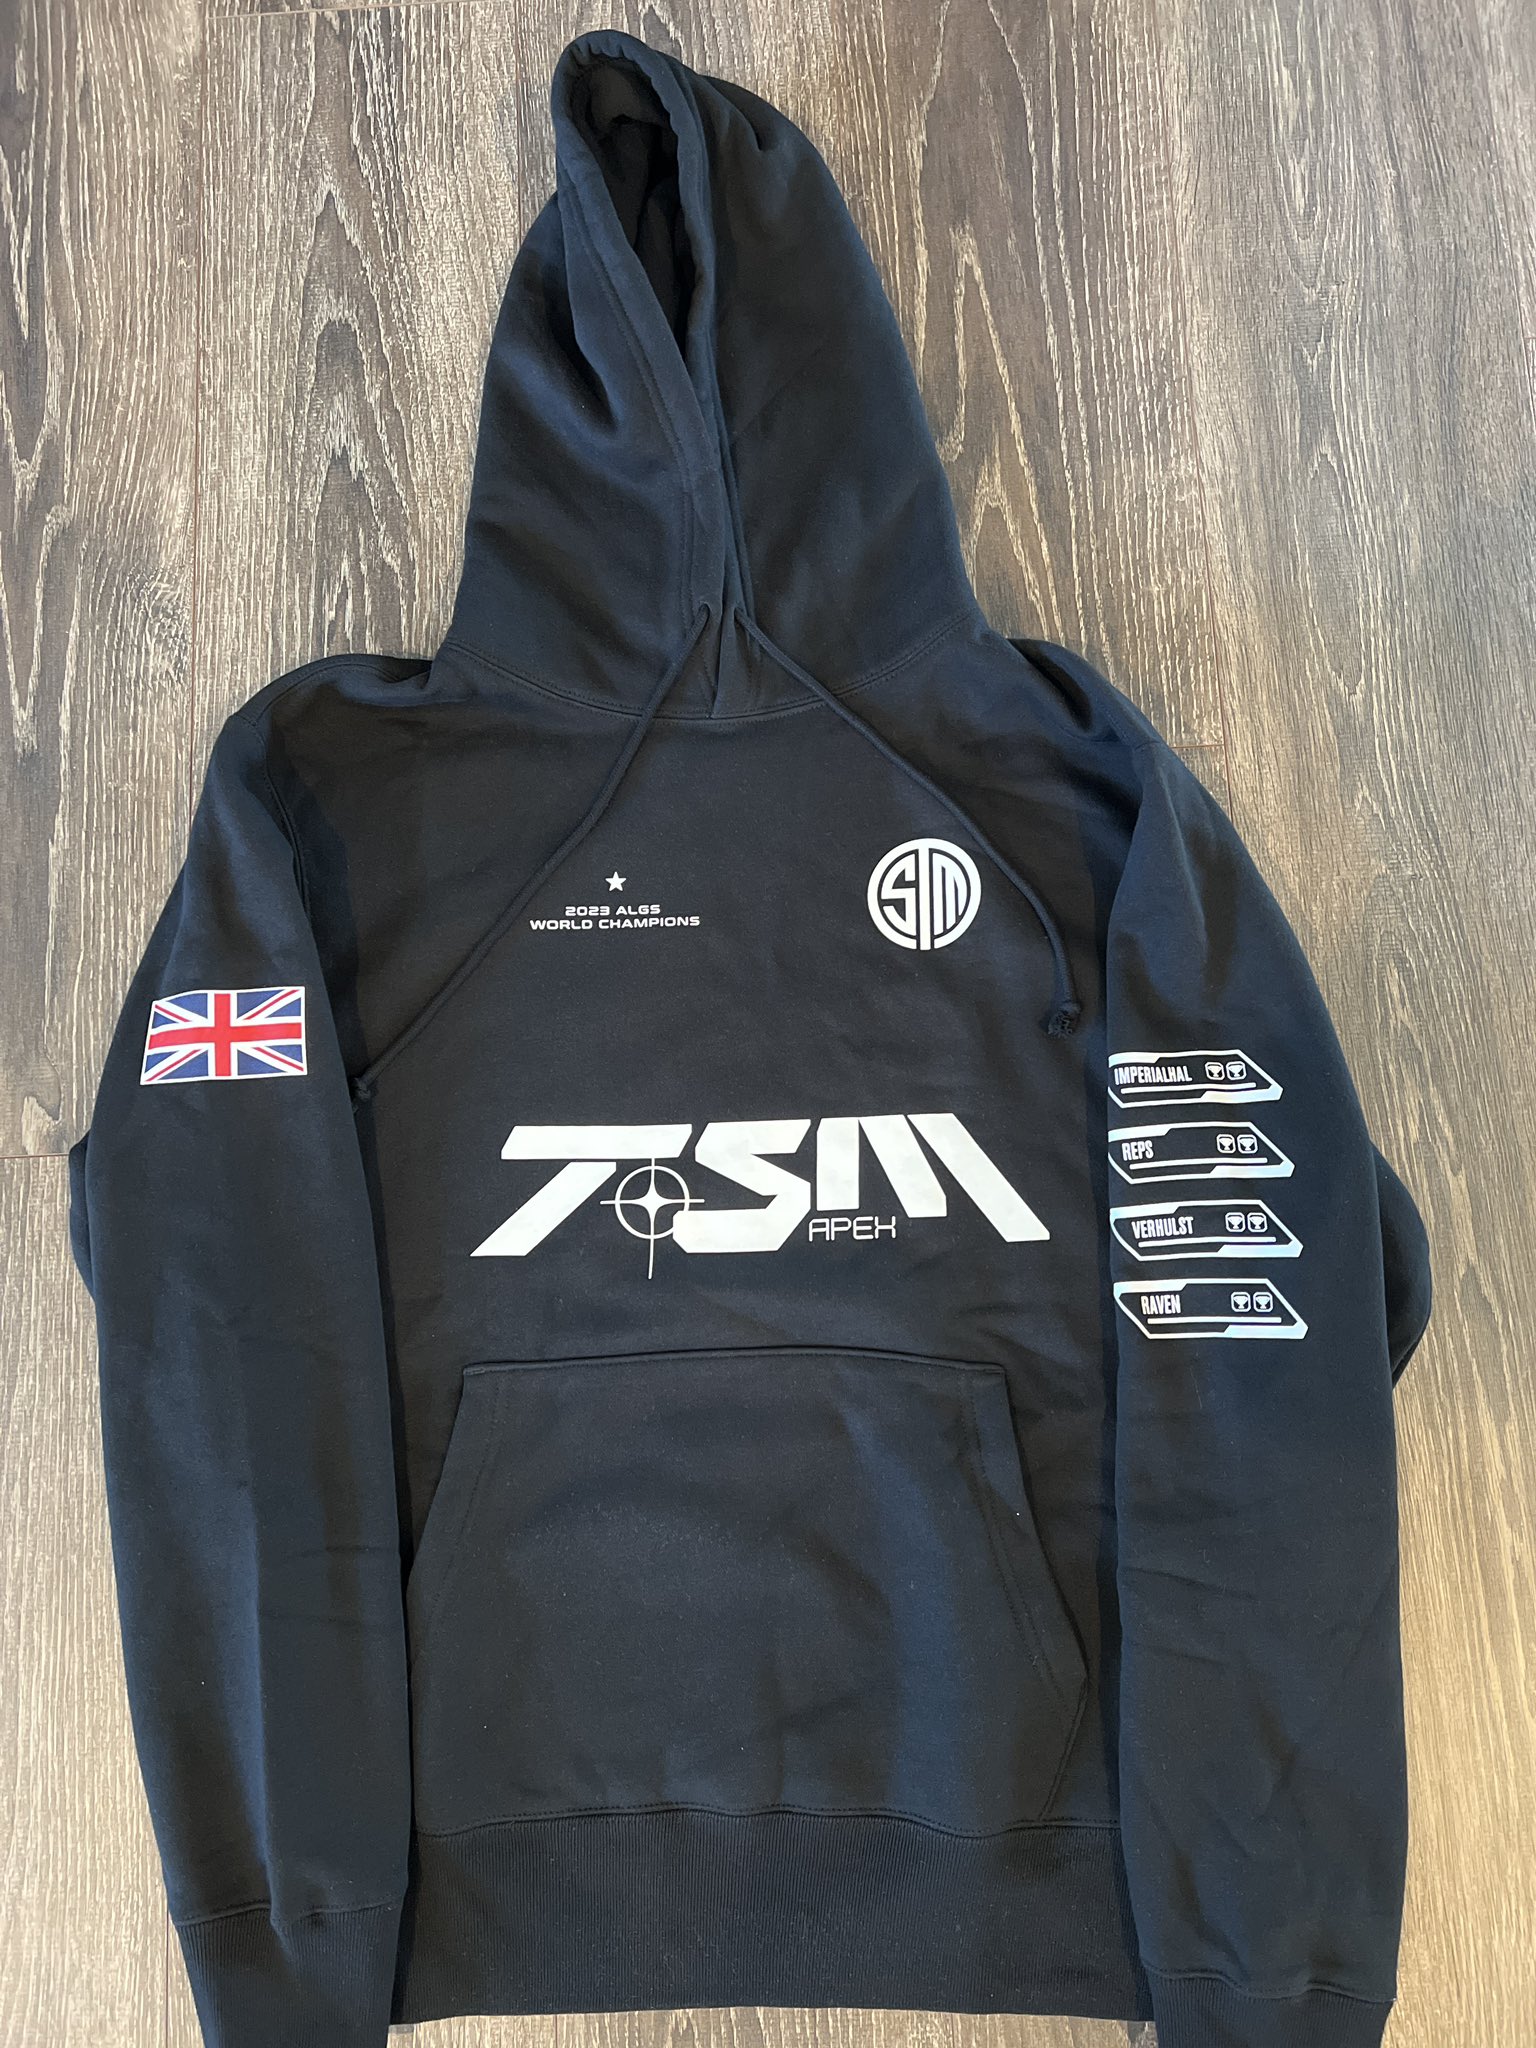 The Official TSM Store – TSM Shop